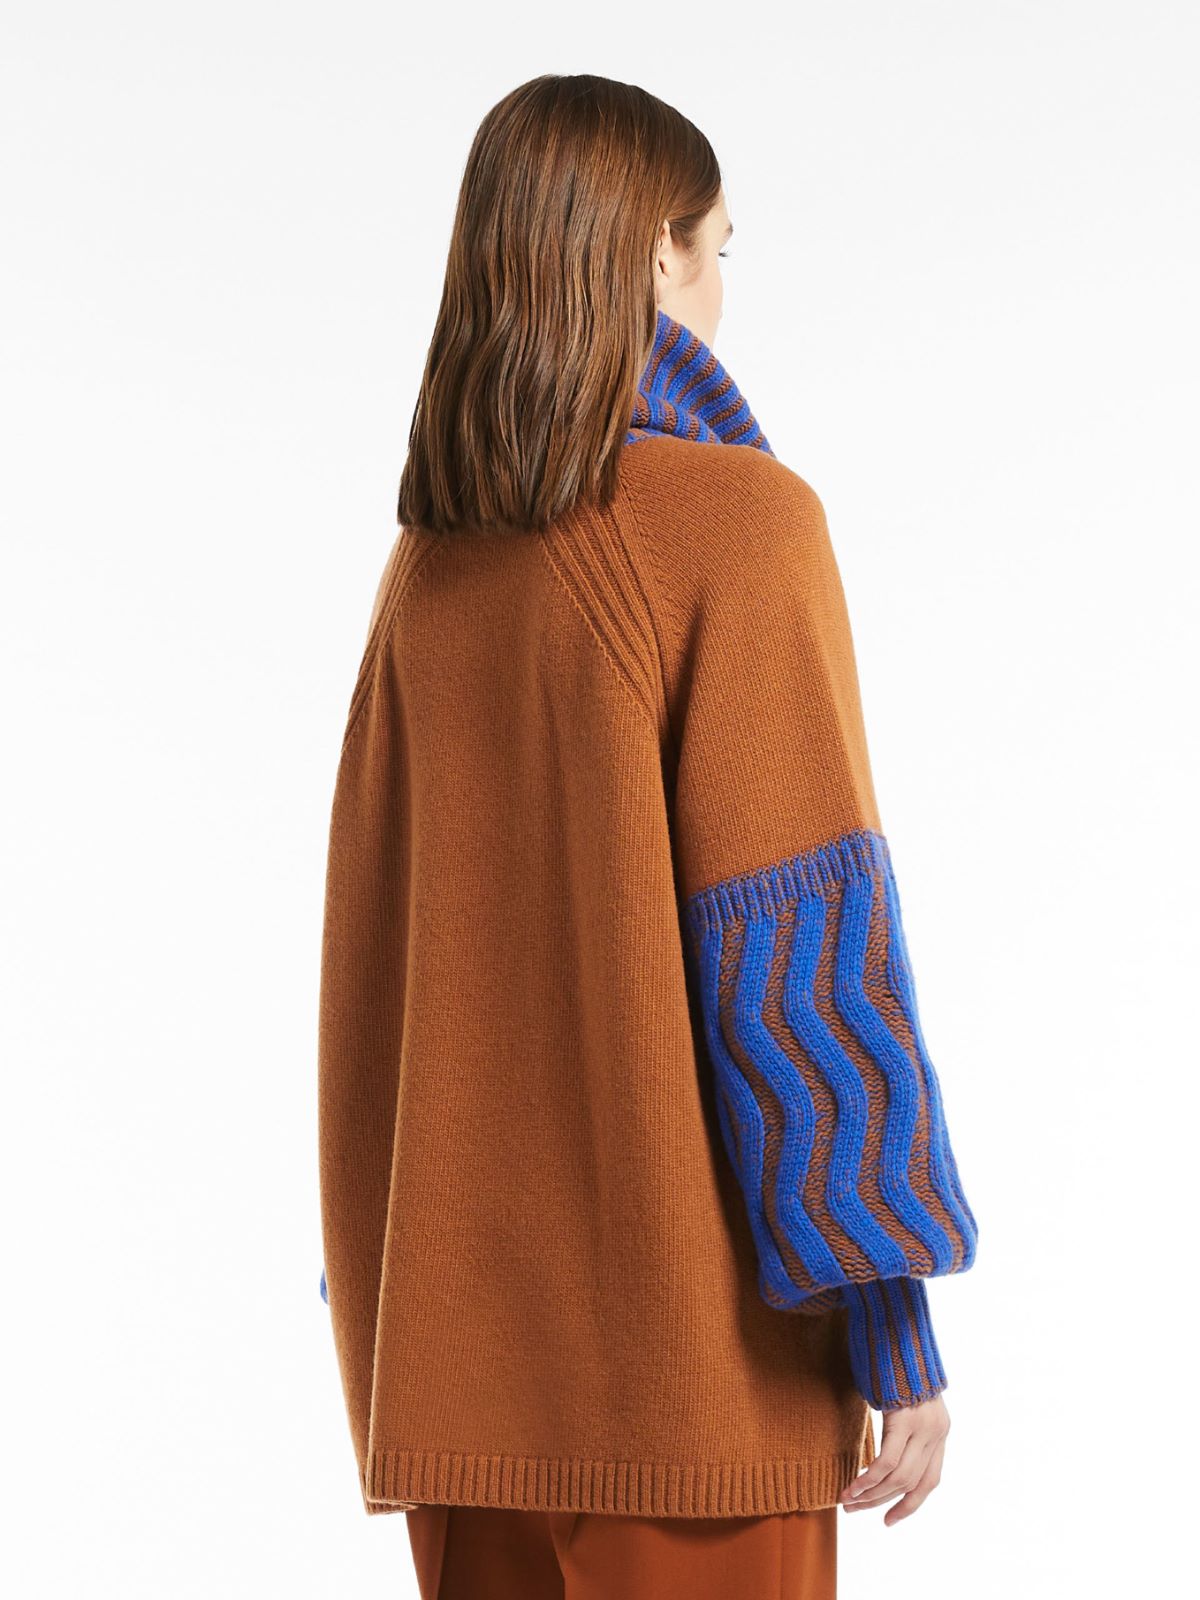 Wool sweater - CORNFLOWER BLUE - Weekend Max Mara - 3